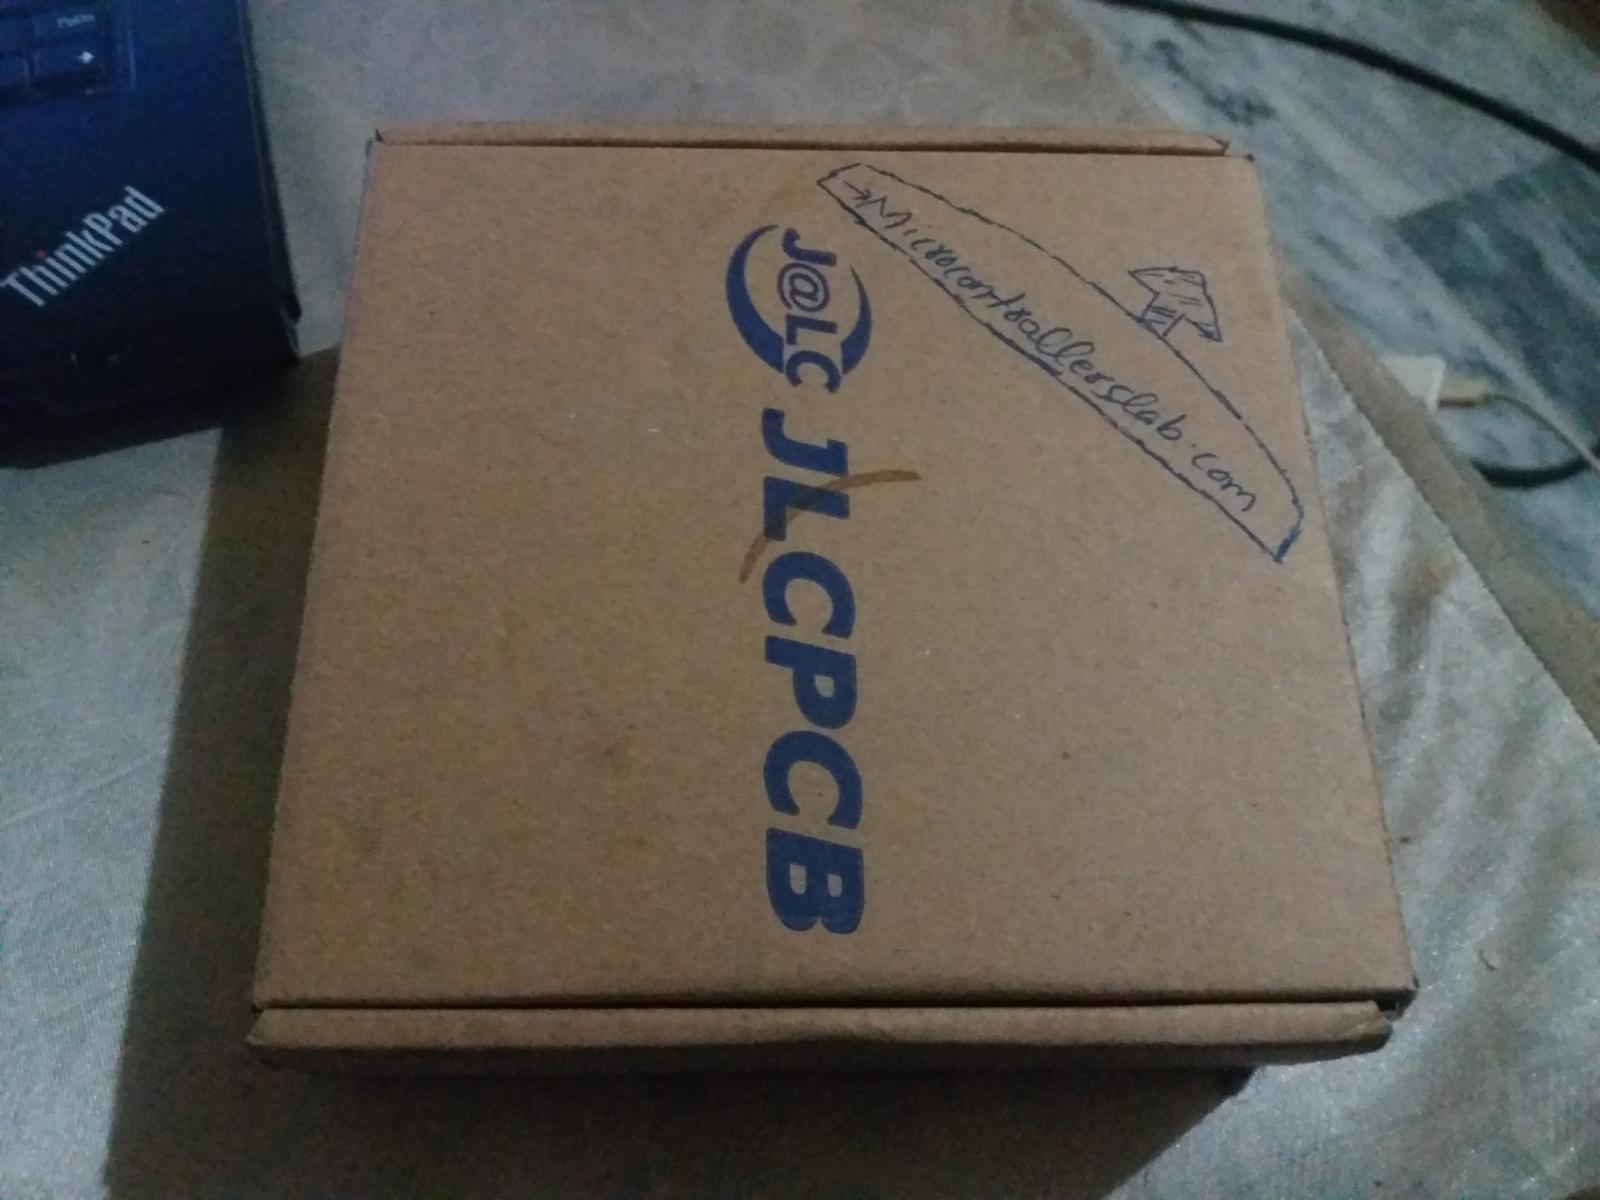 JLCPCB Package